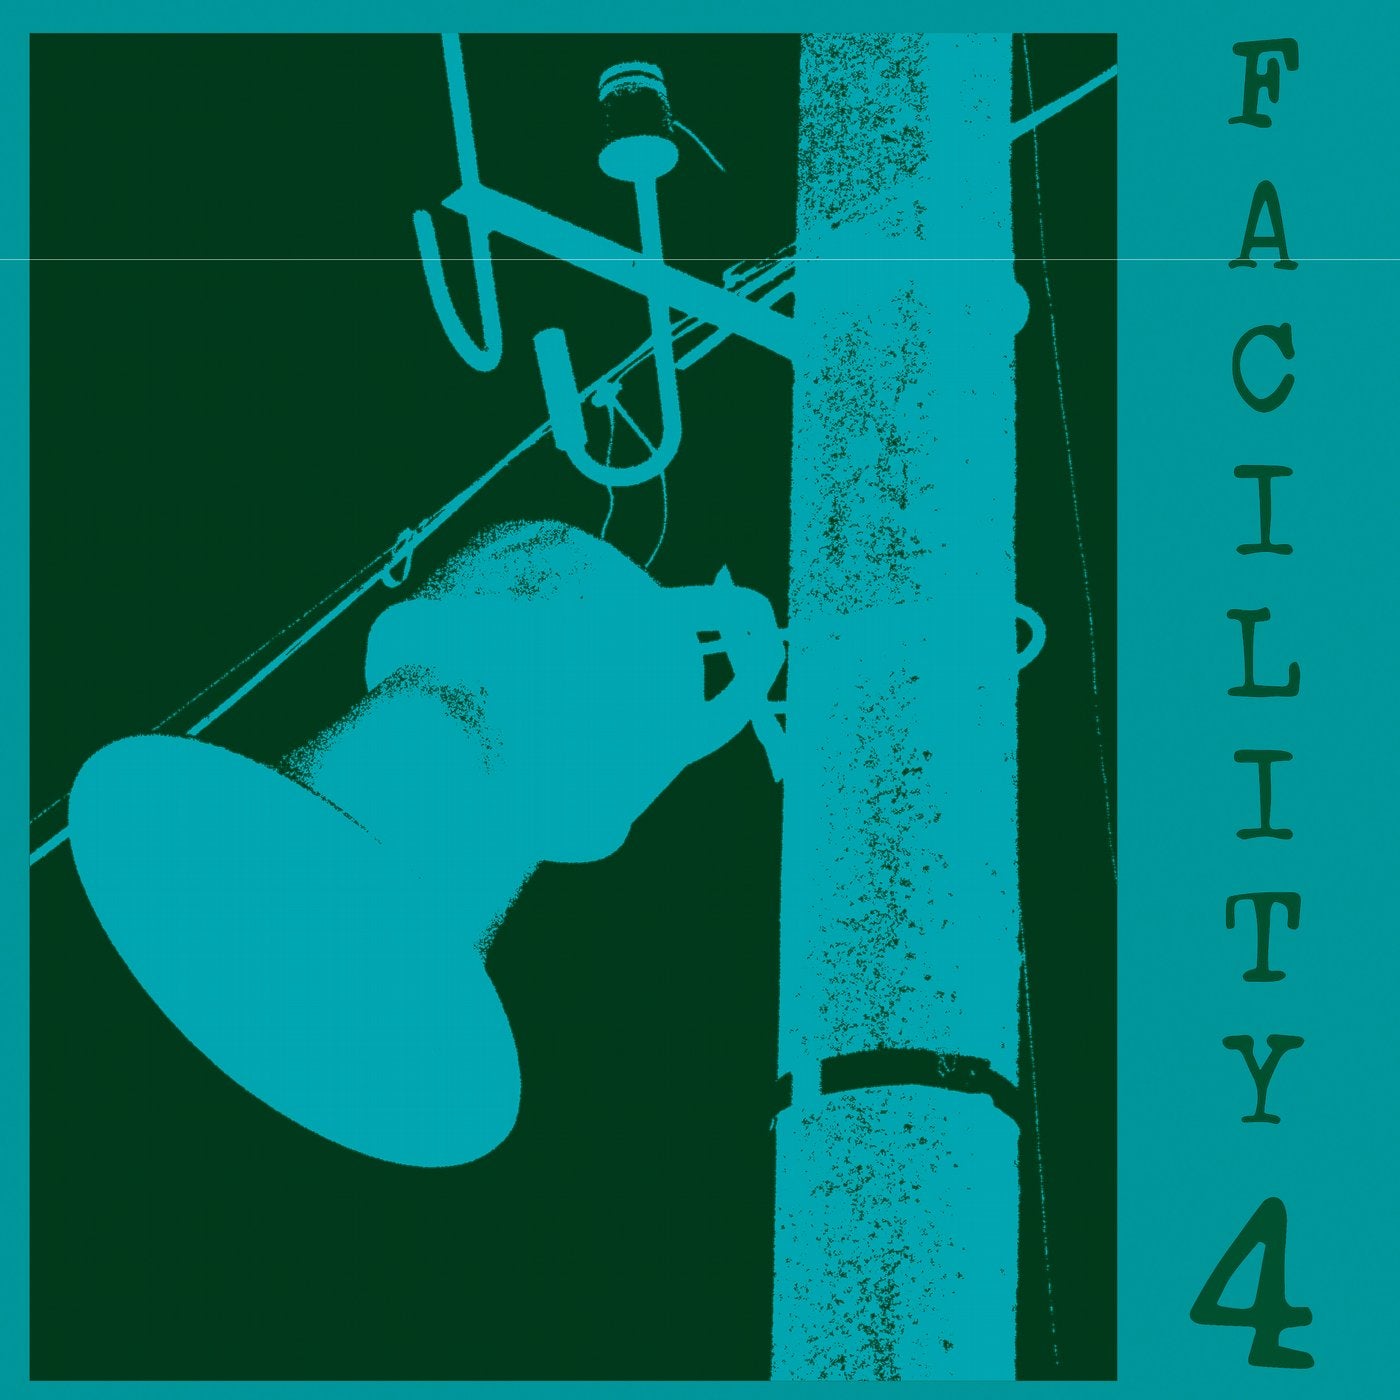 Facility 4: Downhill